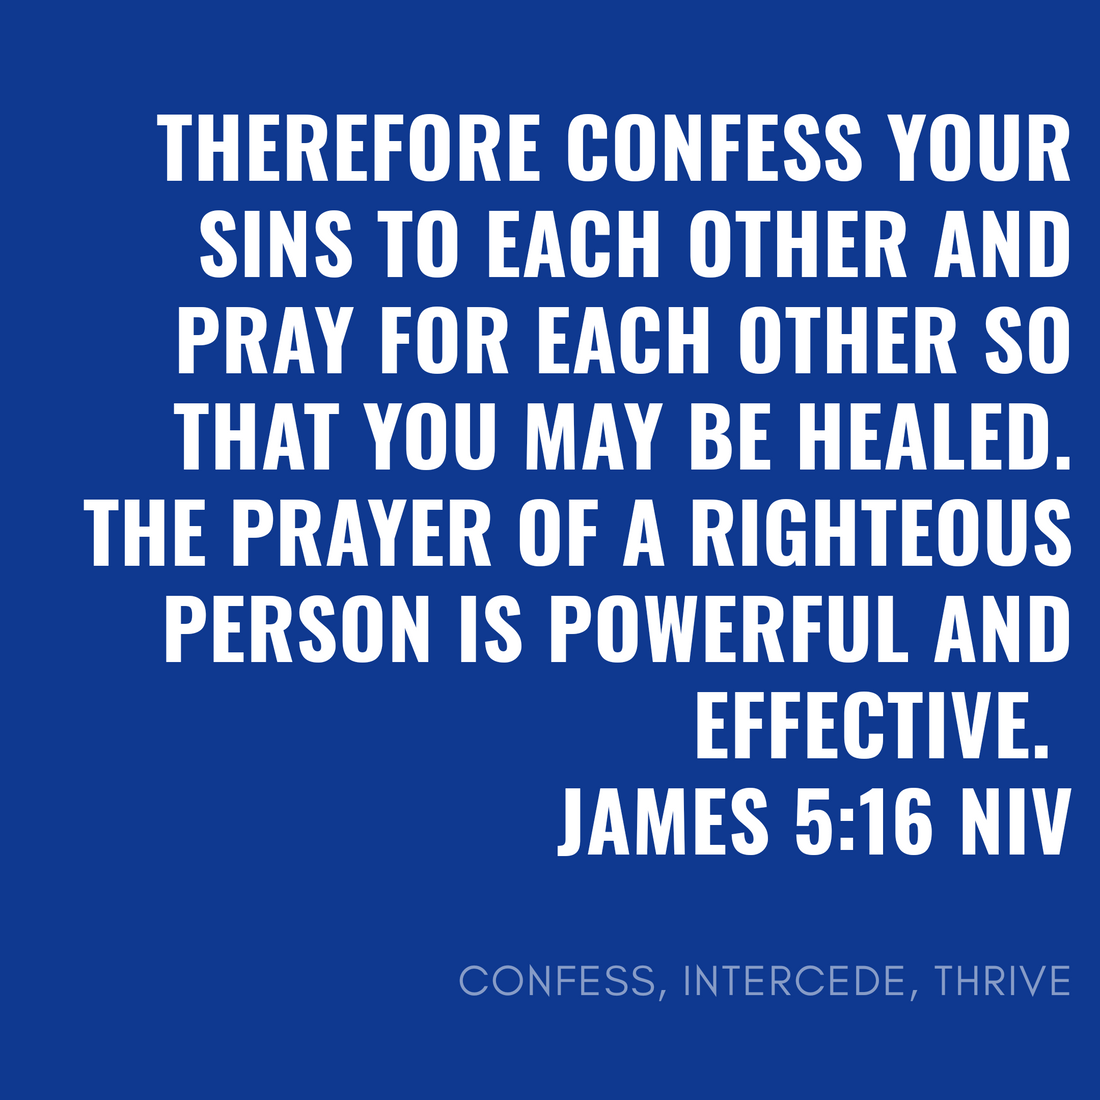 Confess. Intercede. Thrive.